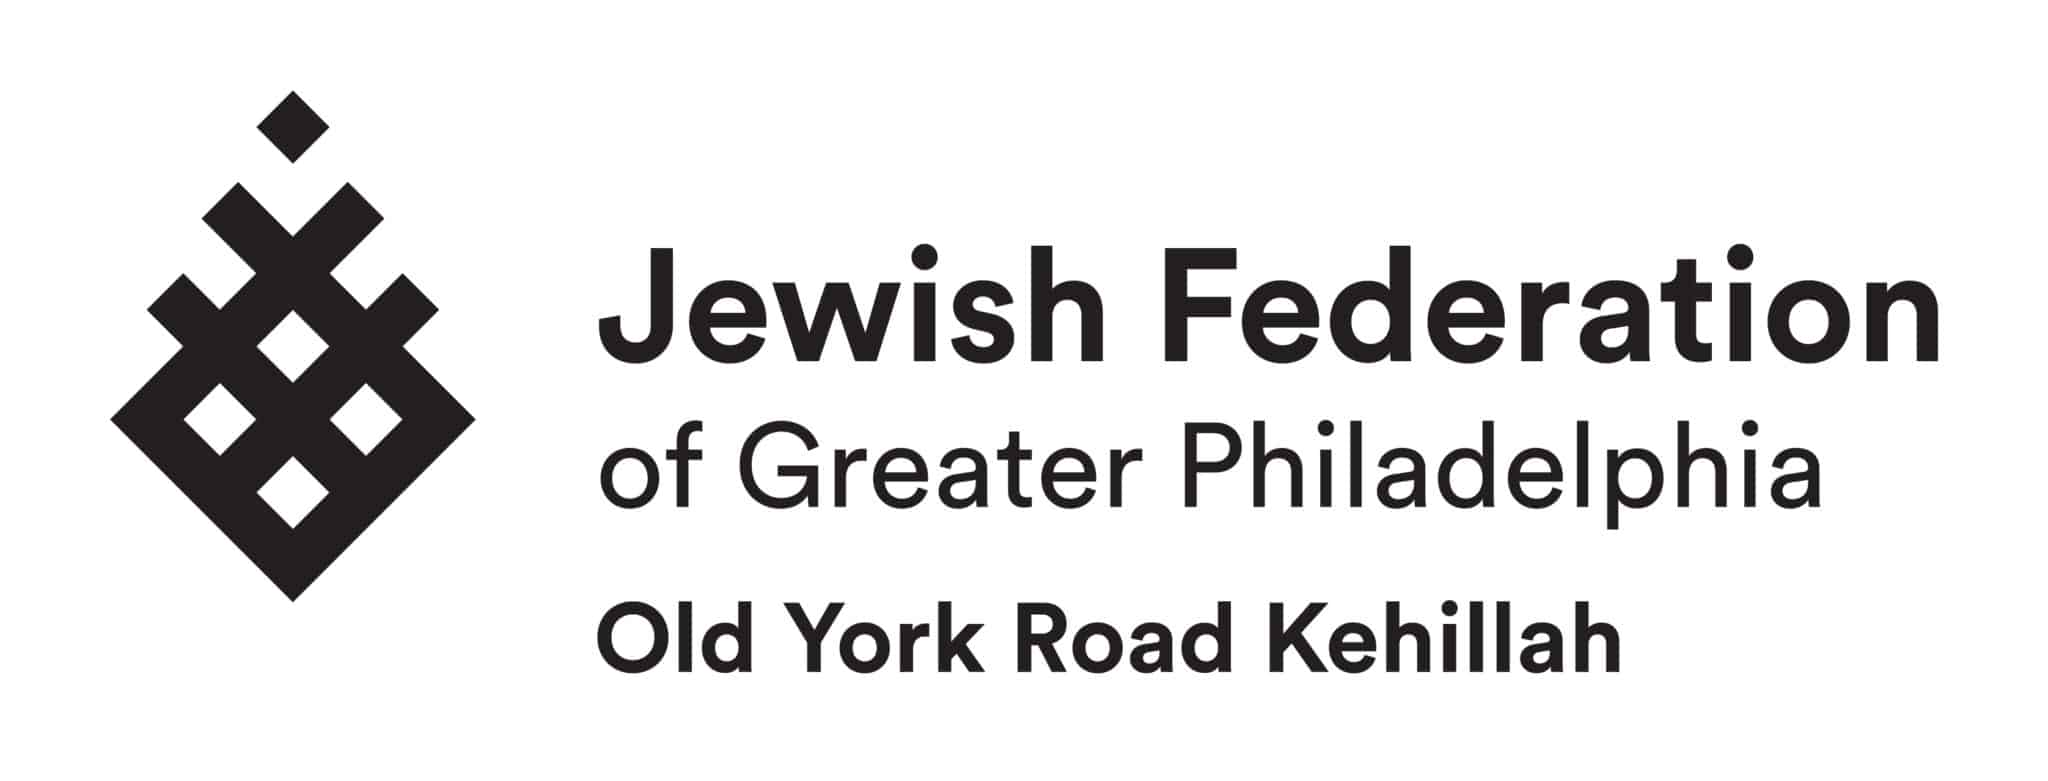 Jewish Federation of Greater Philadelphia - logo